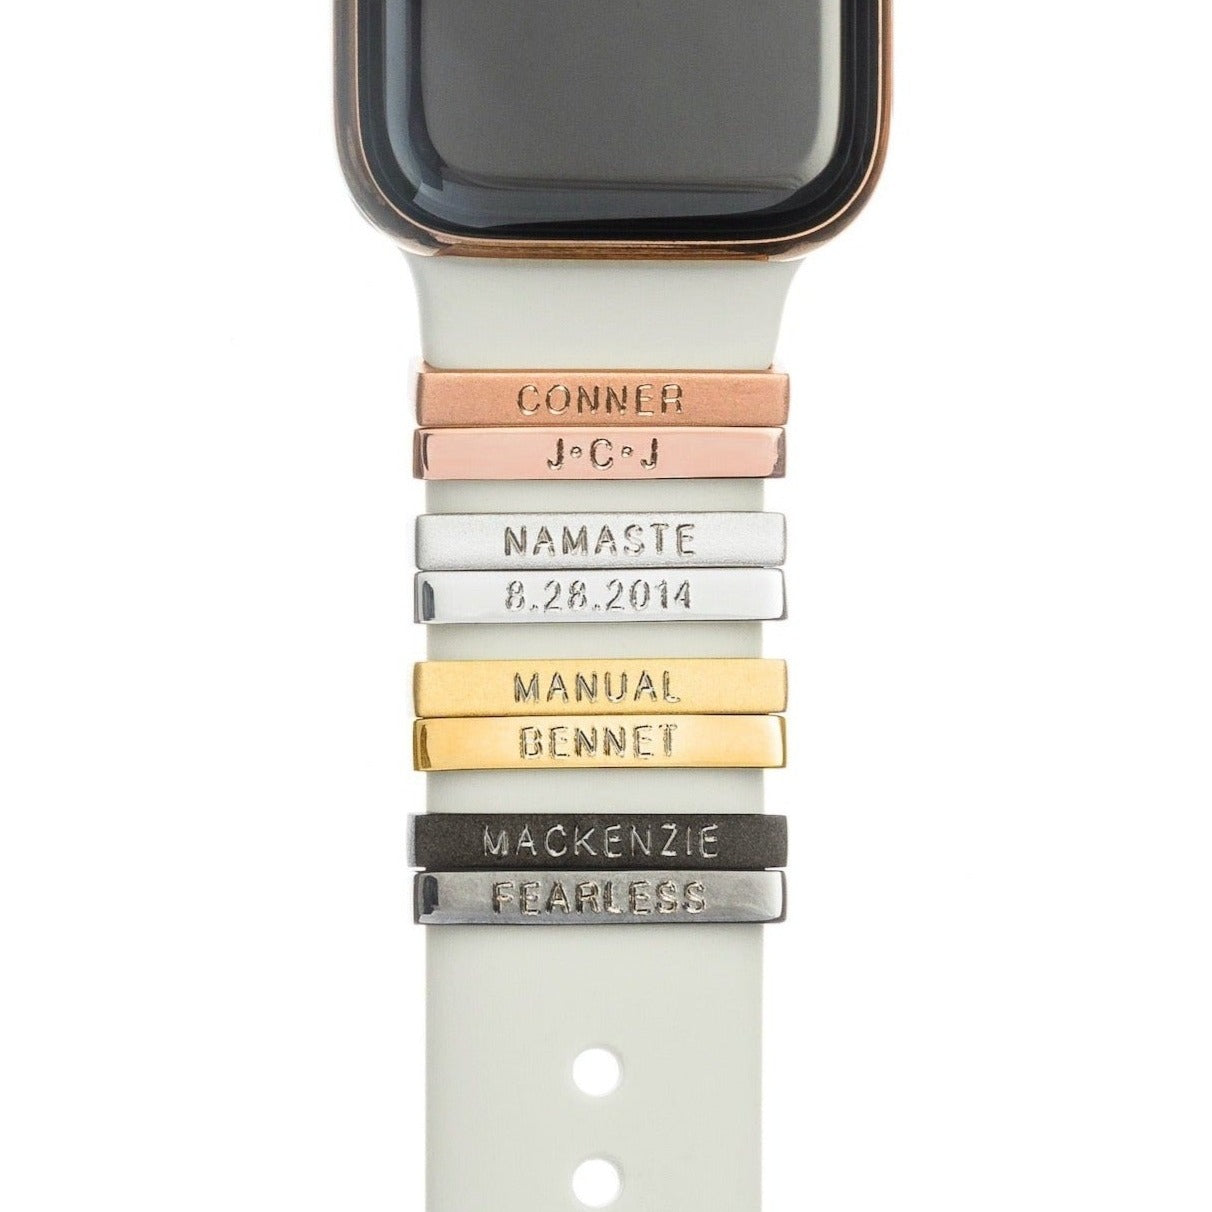 Custom apple watch band